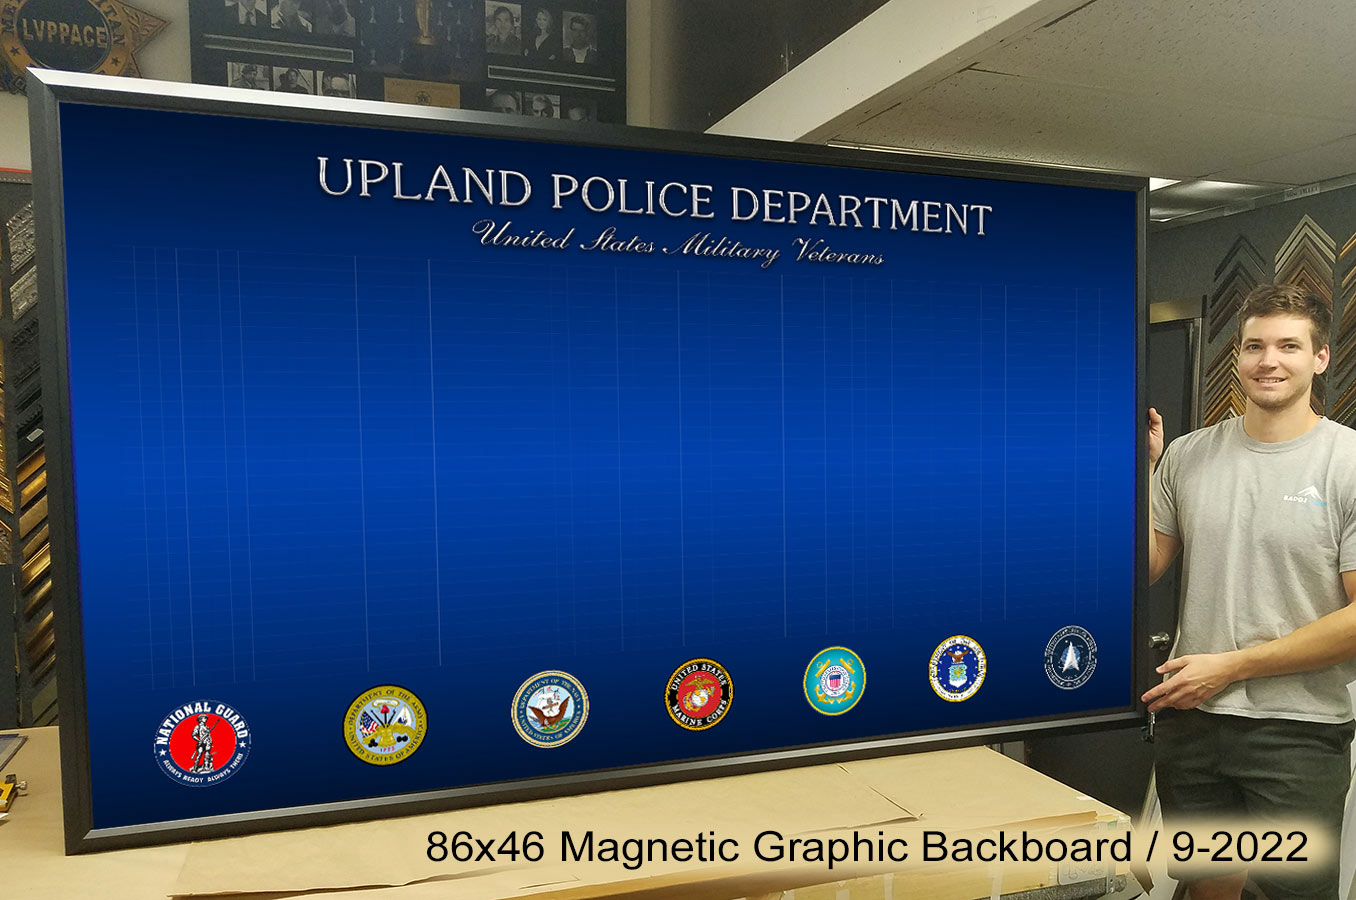 upland-military-service-2.jpg